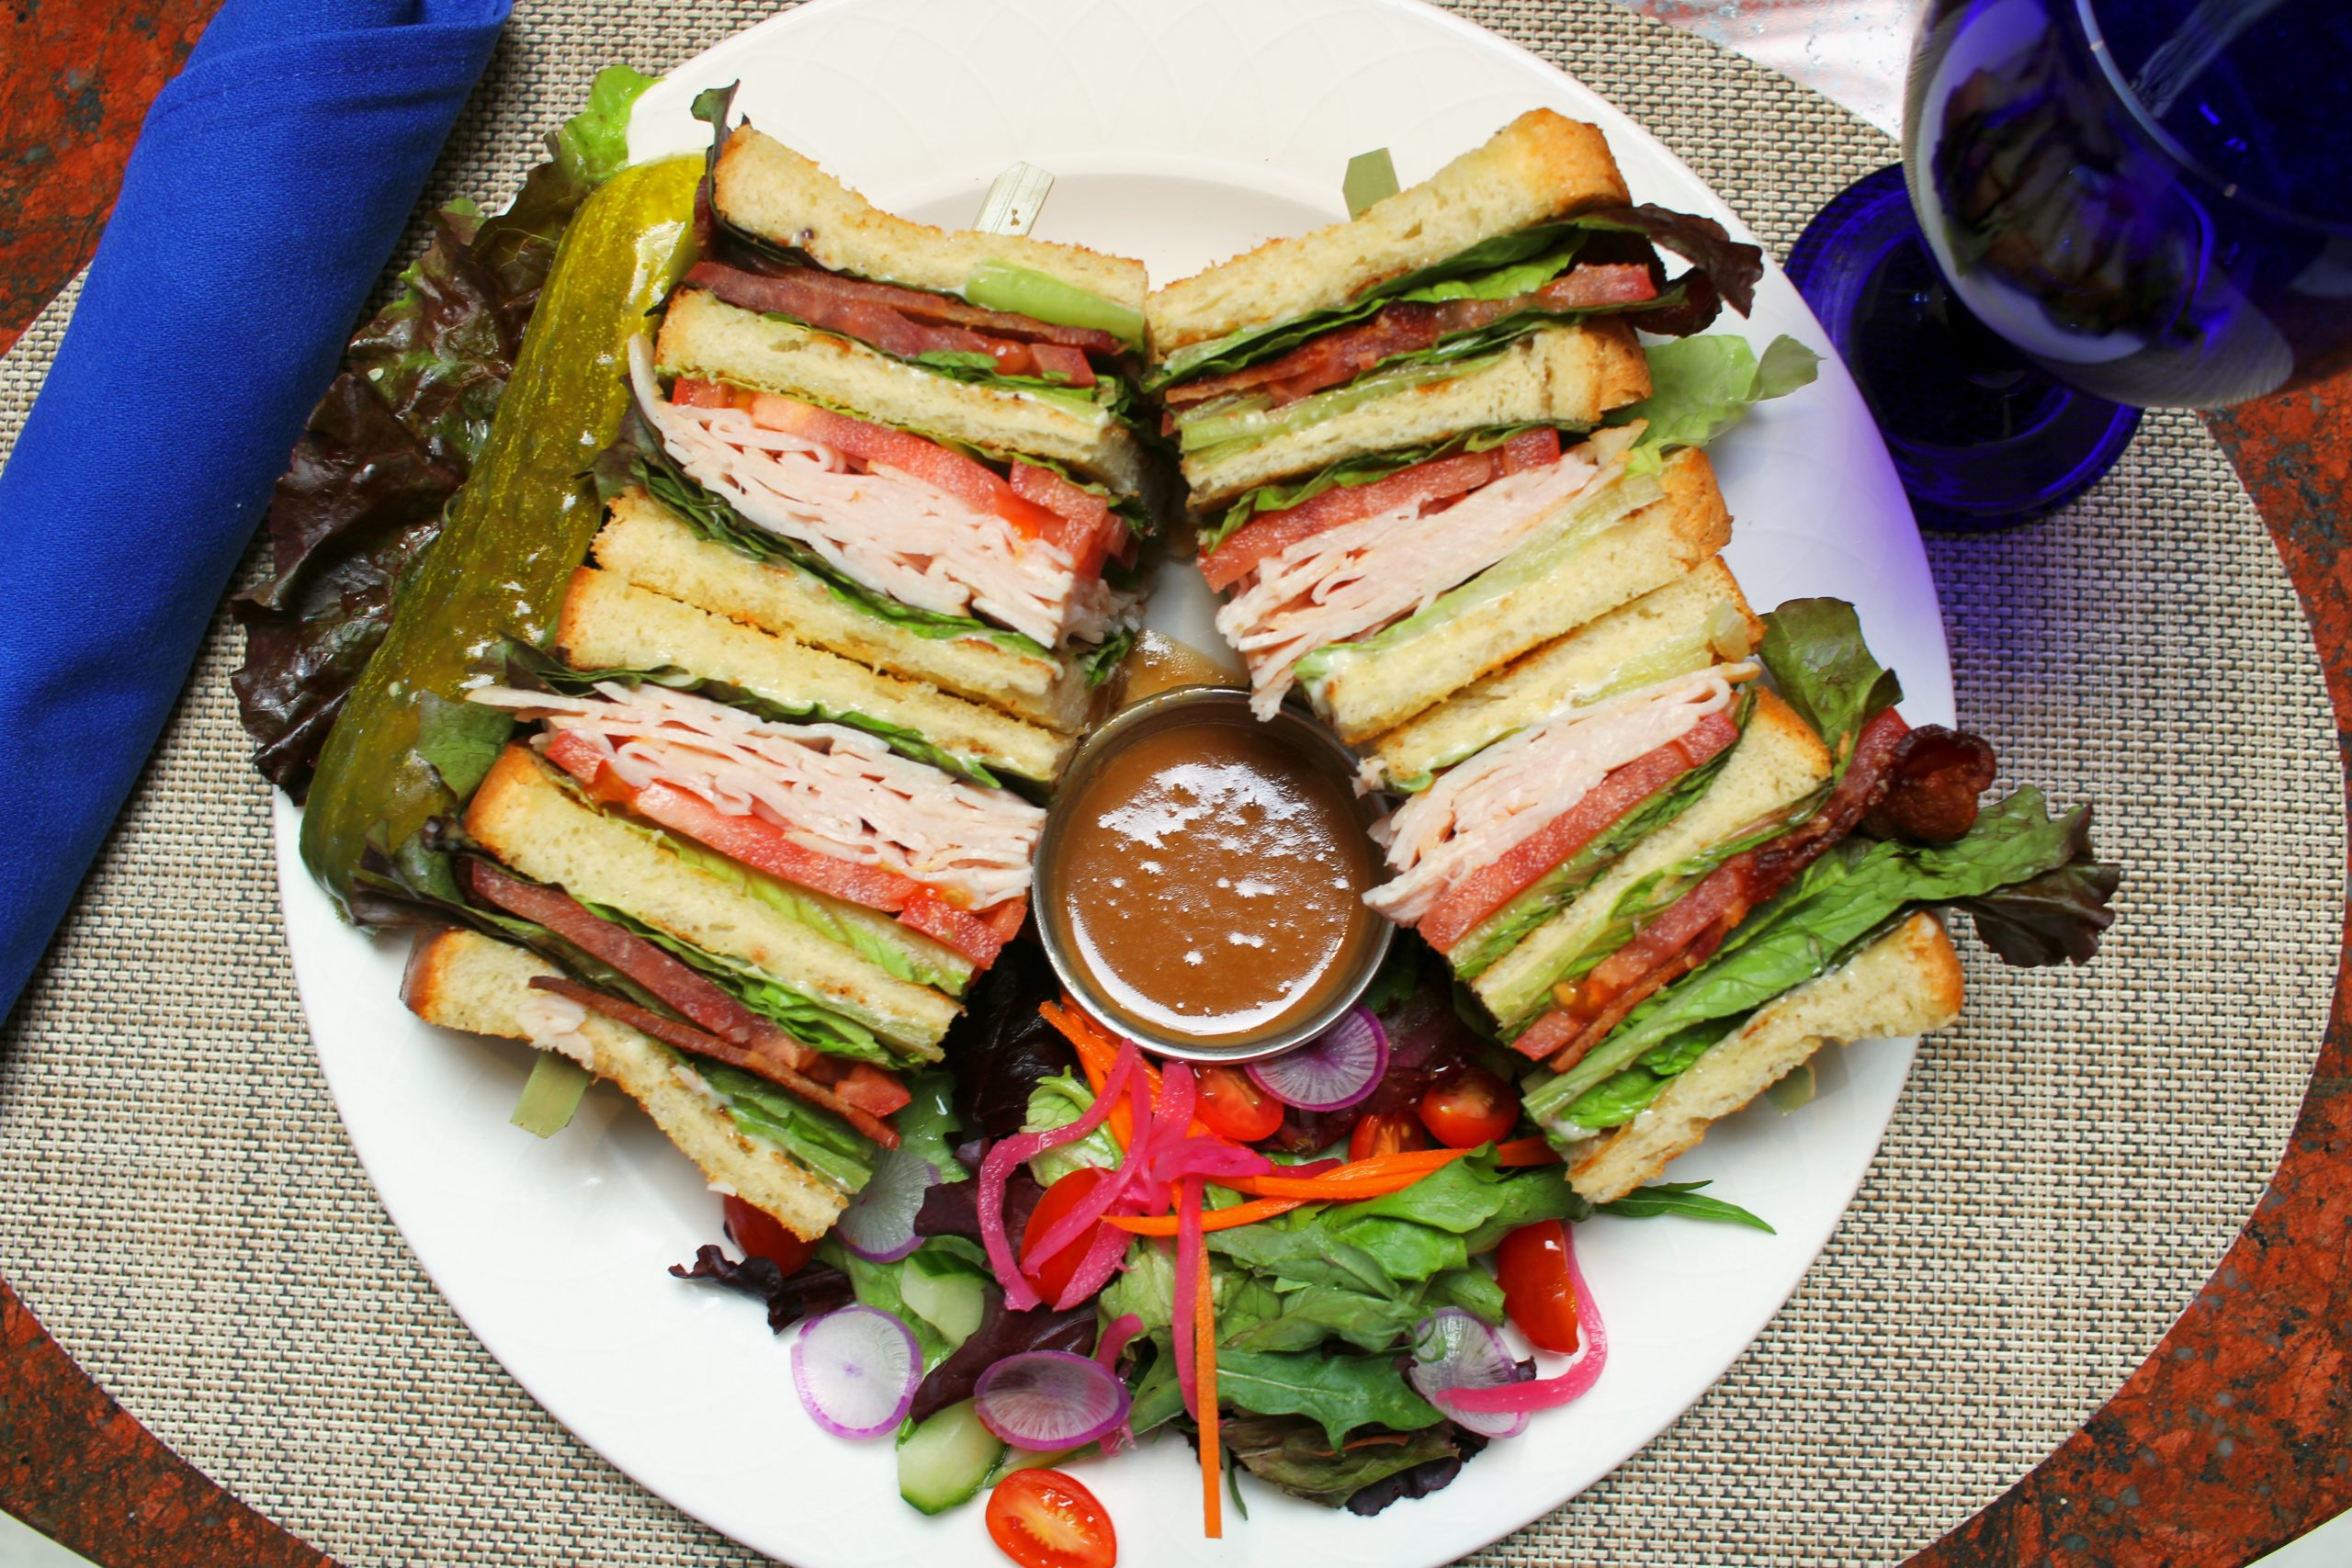 The Club Sandwich at Arizona Inn (Photo by Mark Whittaker)